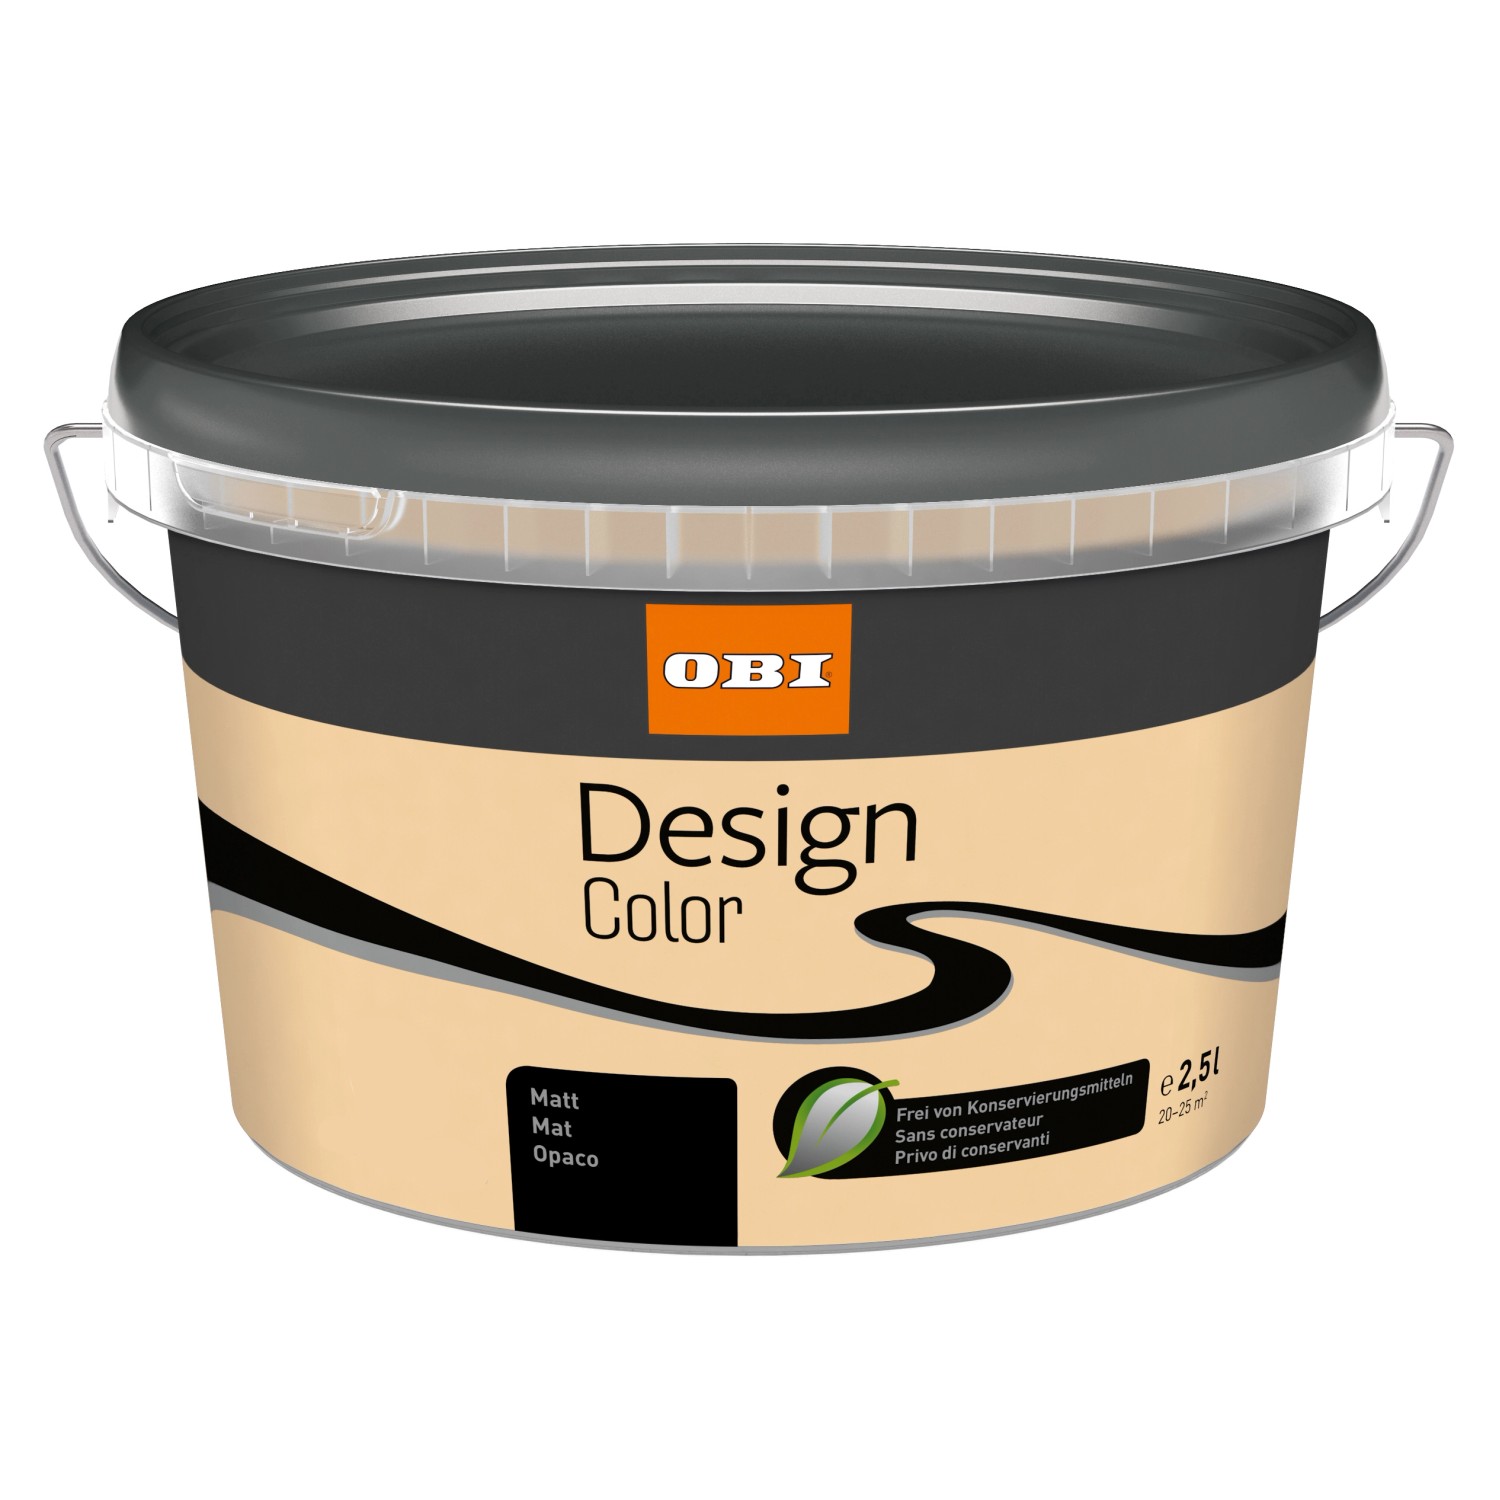 OBI Design Color matt Toffee 2,5 l von OBI